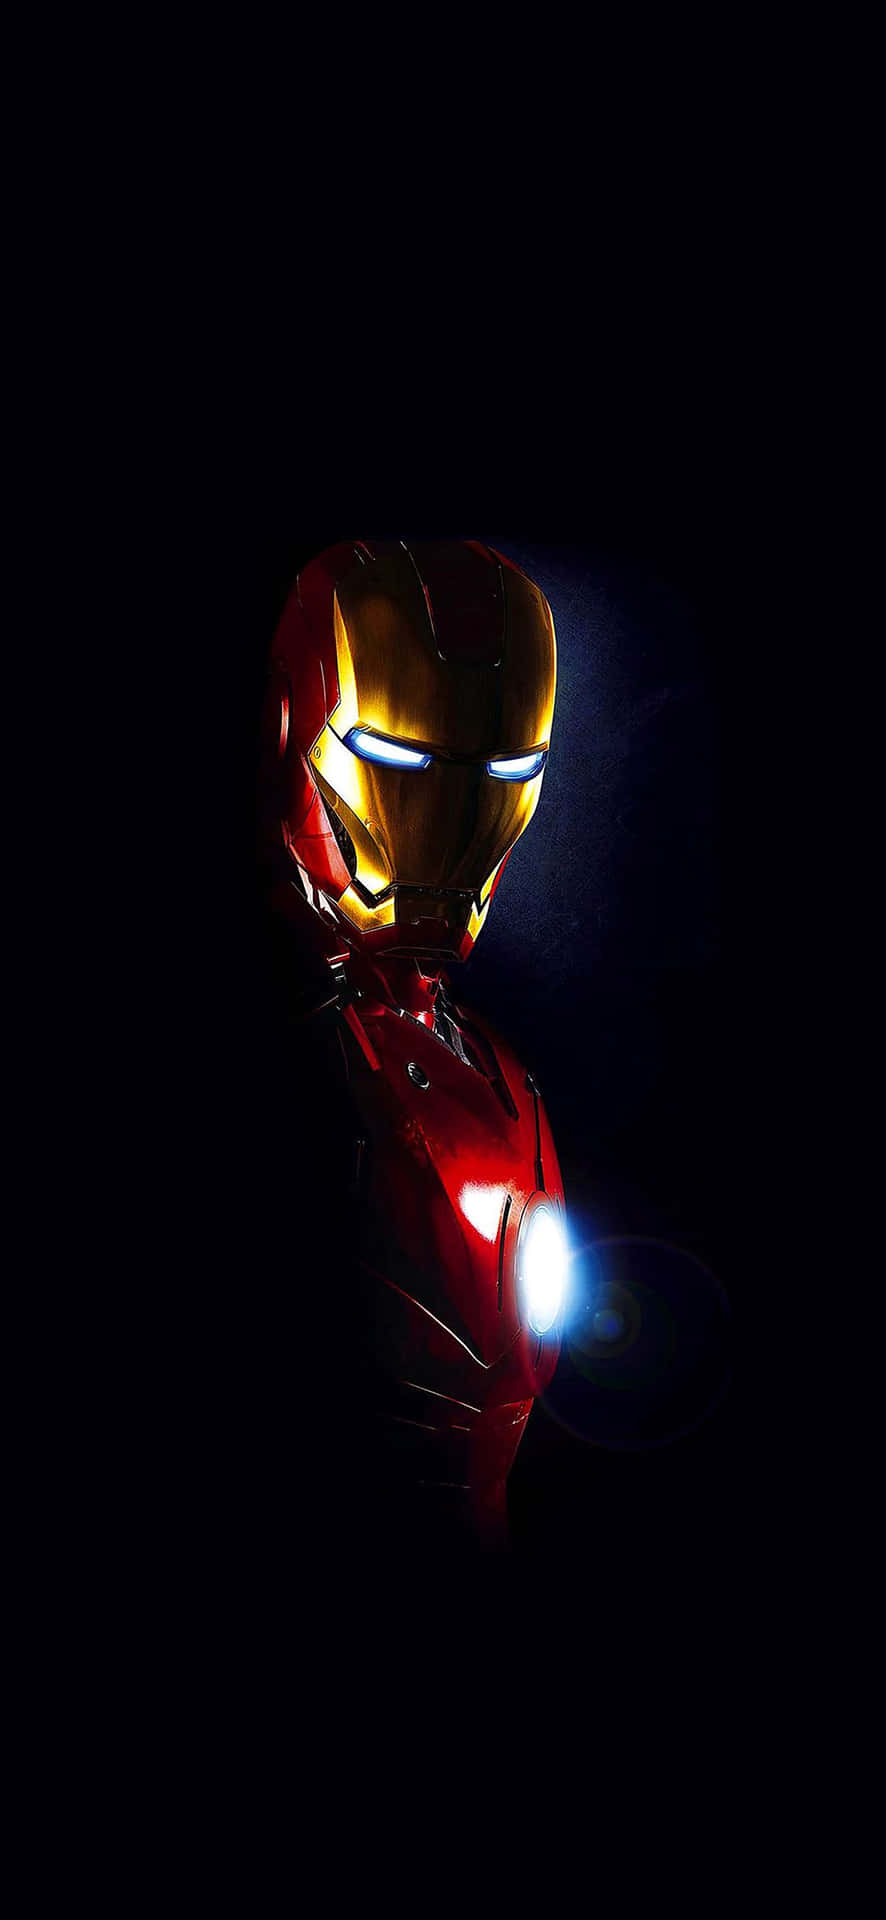 Rivelareil Potere Di Iron Man Su Iphone X Sfondo